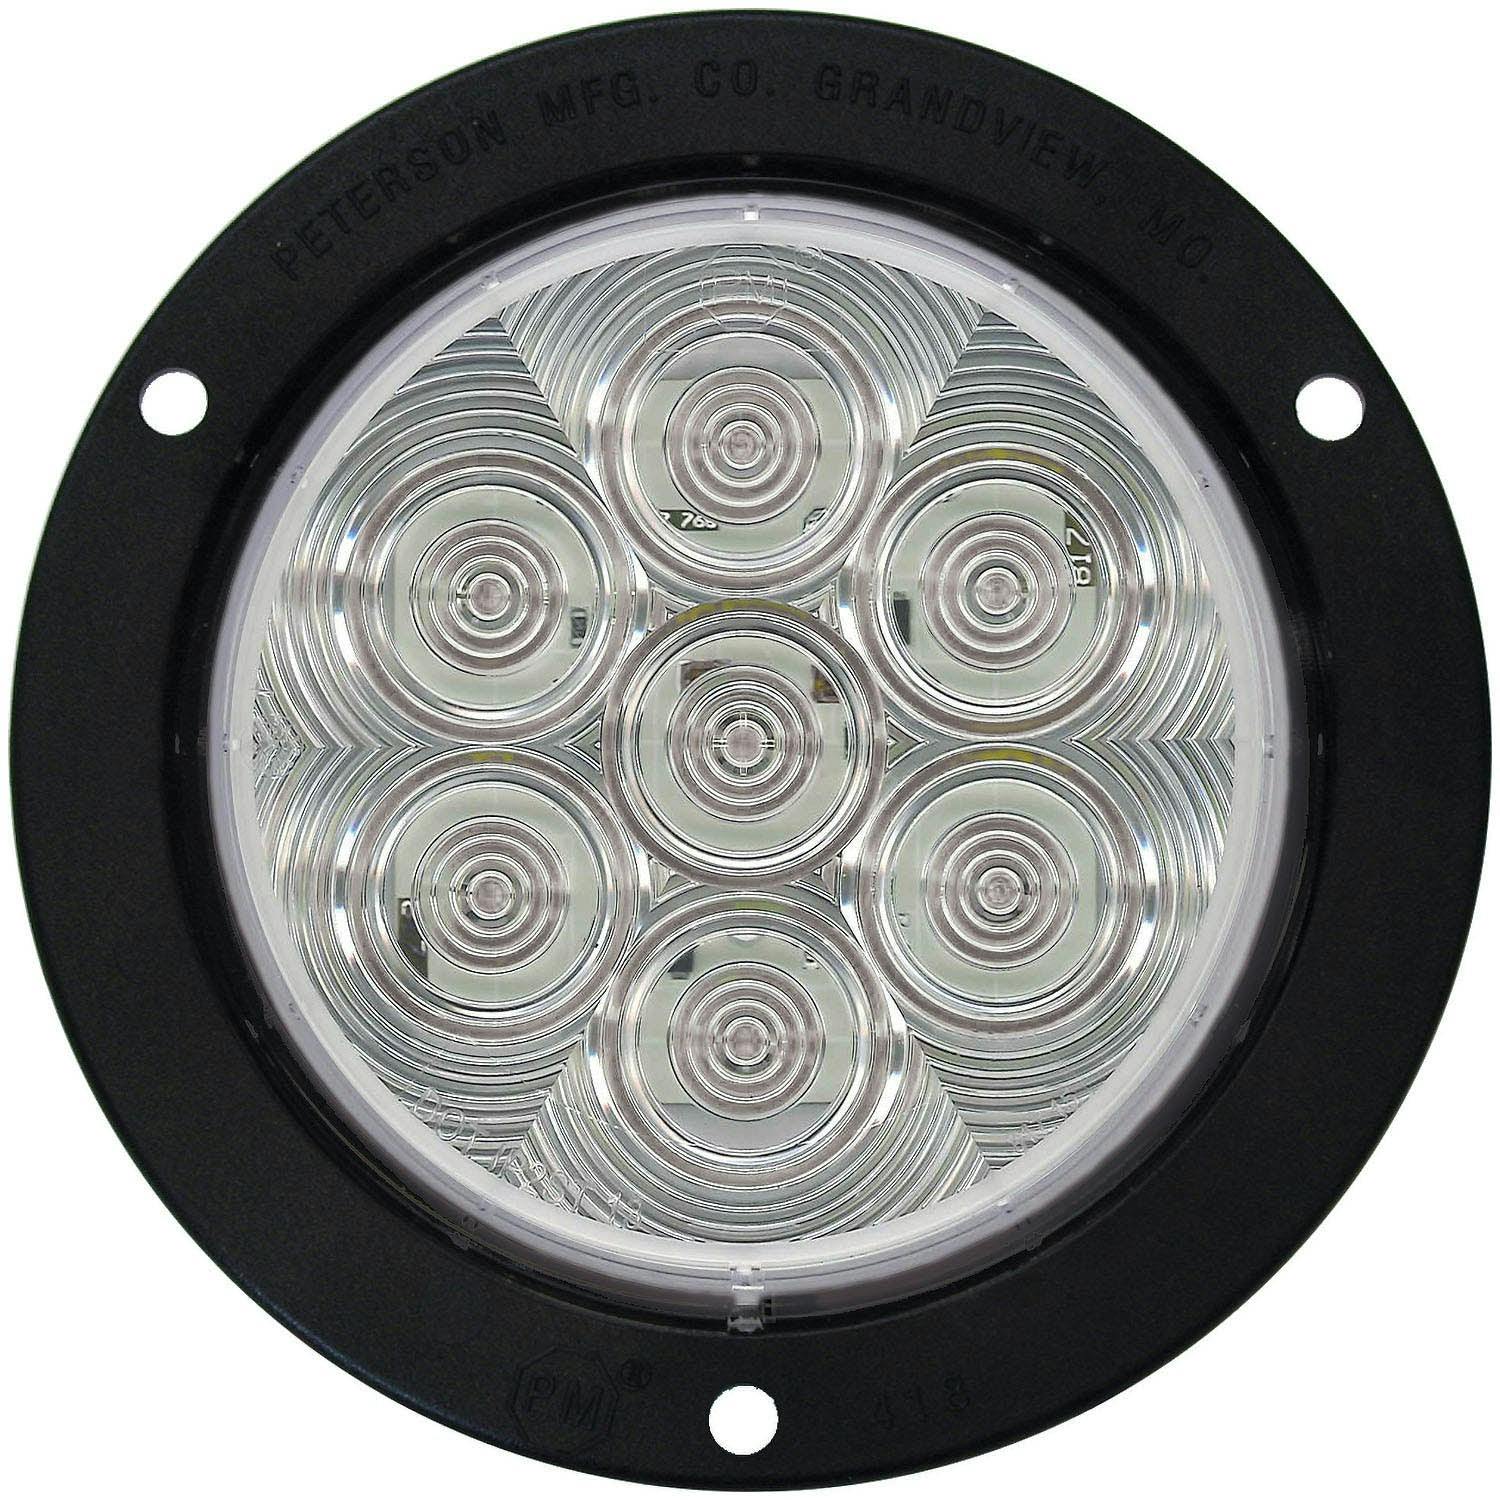 LED Back-Up Light, Round, Flange-Mount 4", white (Pack of 6) - 818C-7